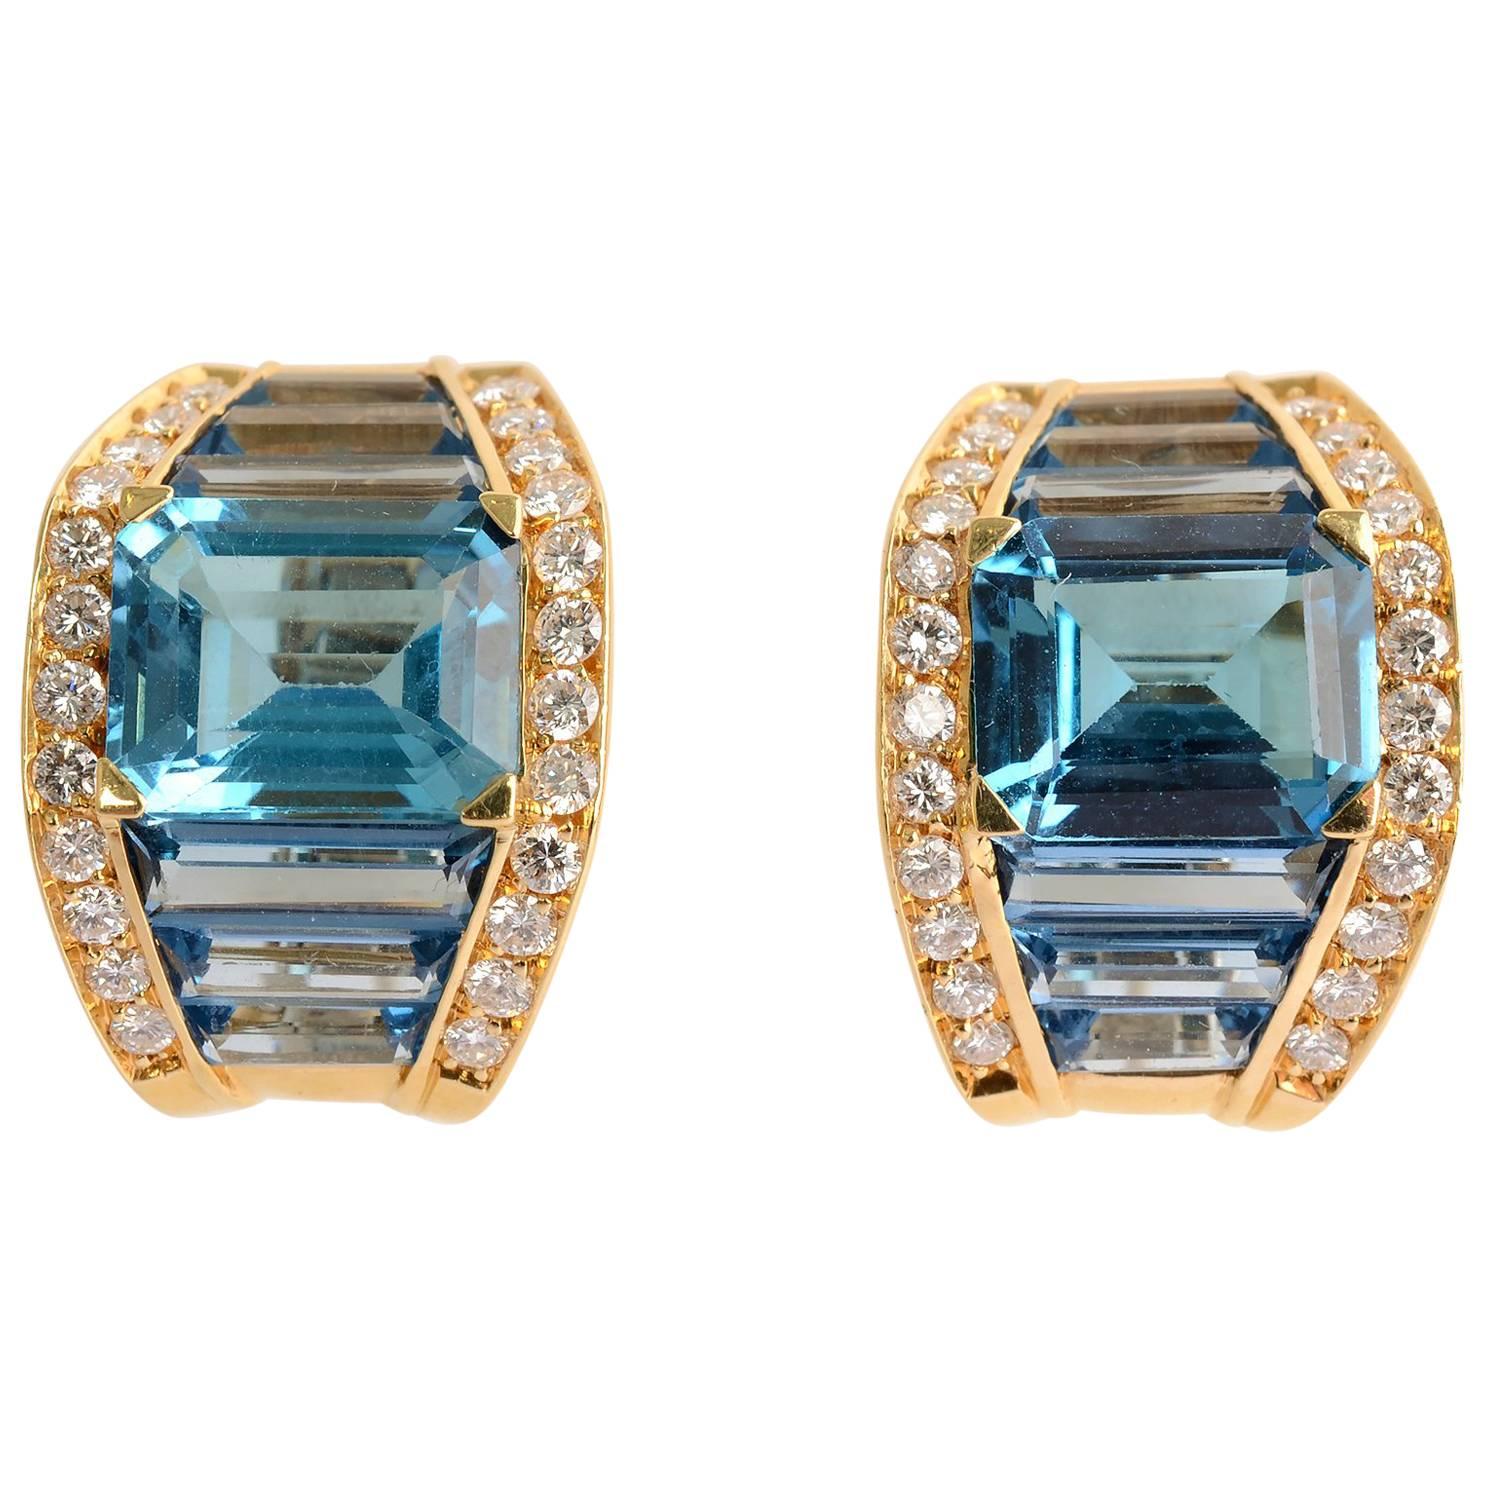 H. Stern Blue Topaz and Diamond Earrings